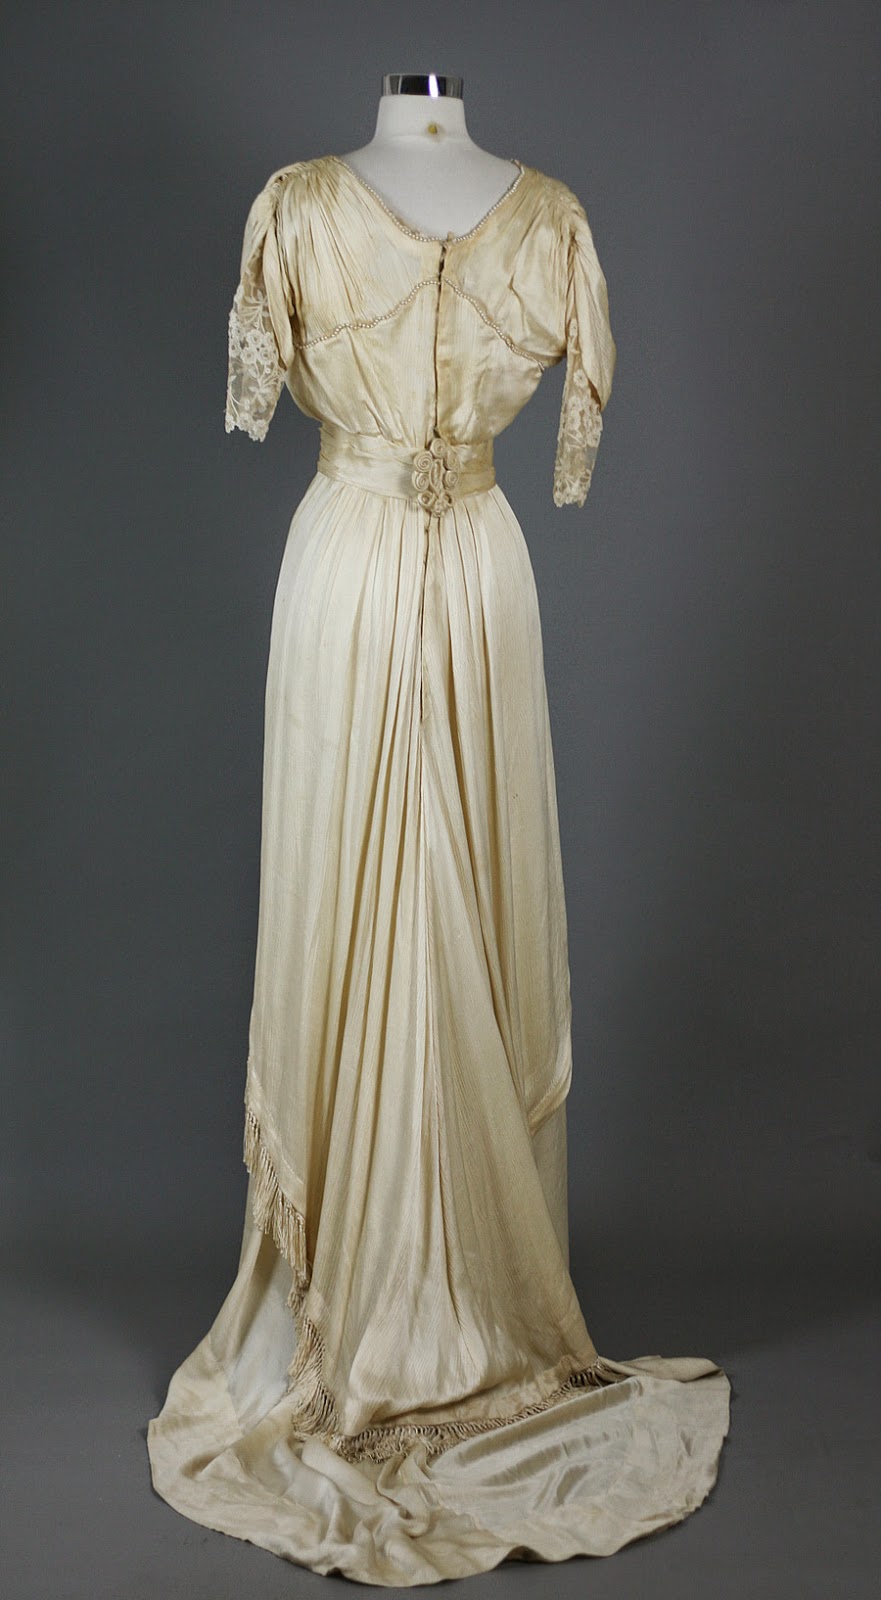 All The Pretty Dresses: Titanic Era Dress